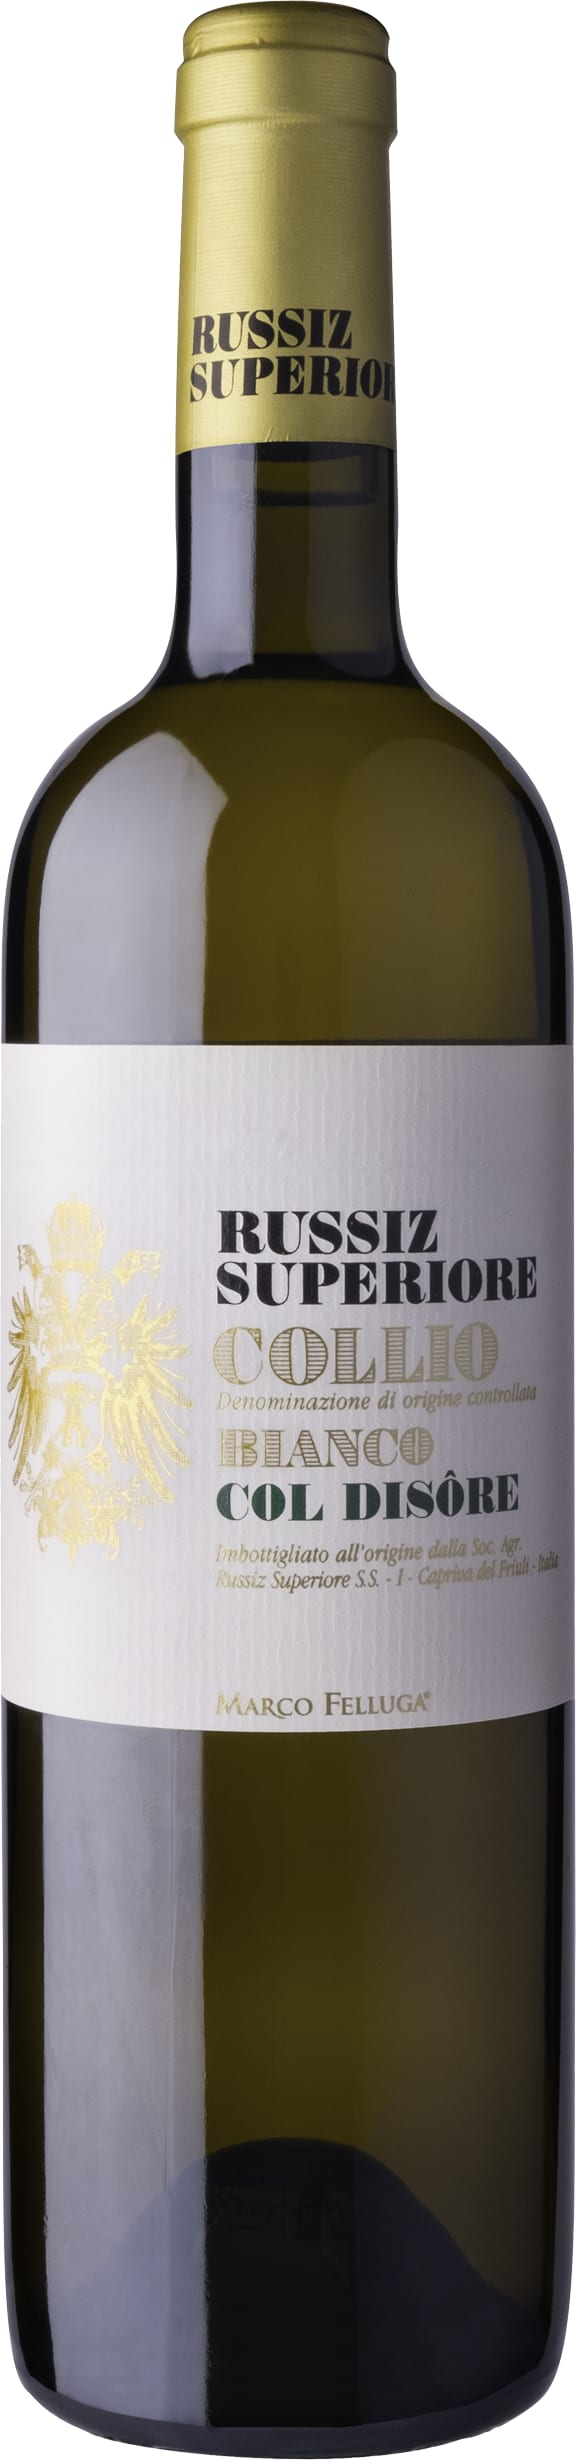 Russiz Superiore Bianco Col Disore, Magnum 2018 150cl - Buy Russiz Superiore Wines from GREAT WINES DIRECT wine shop